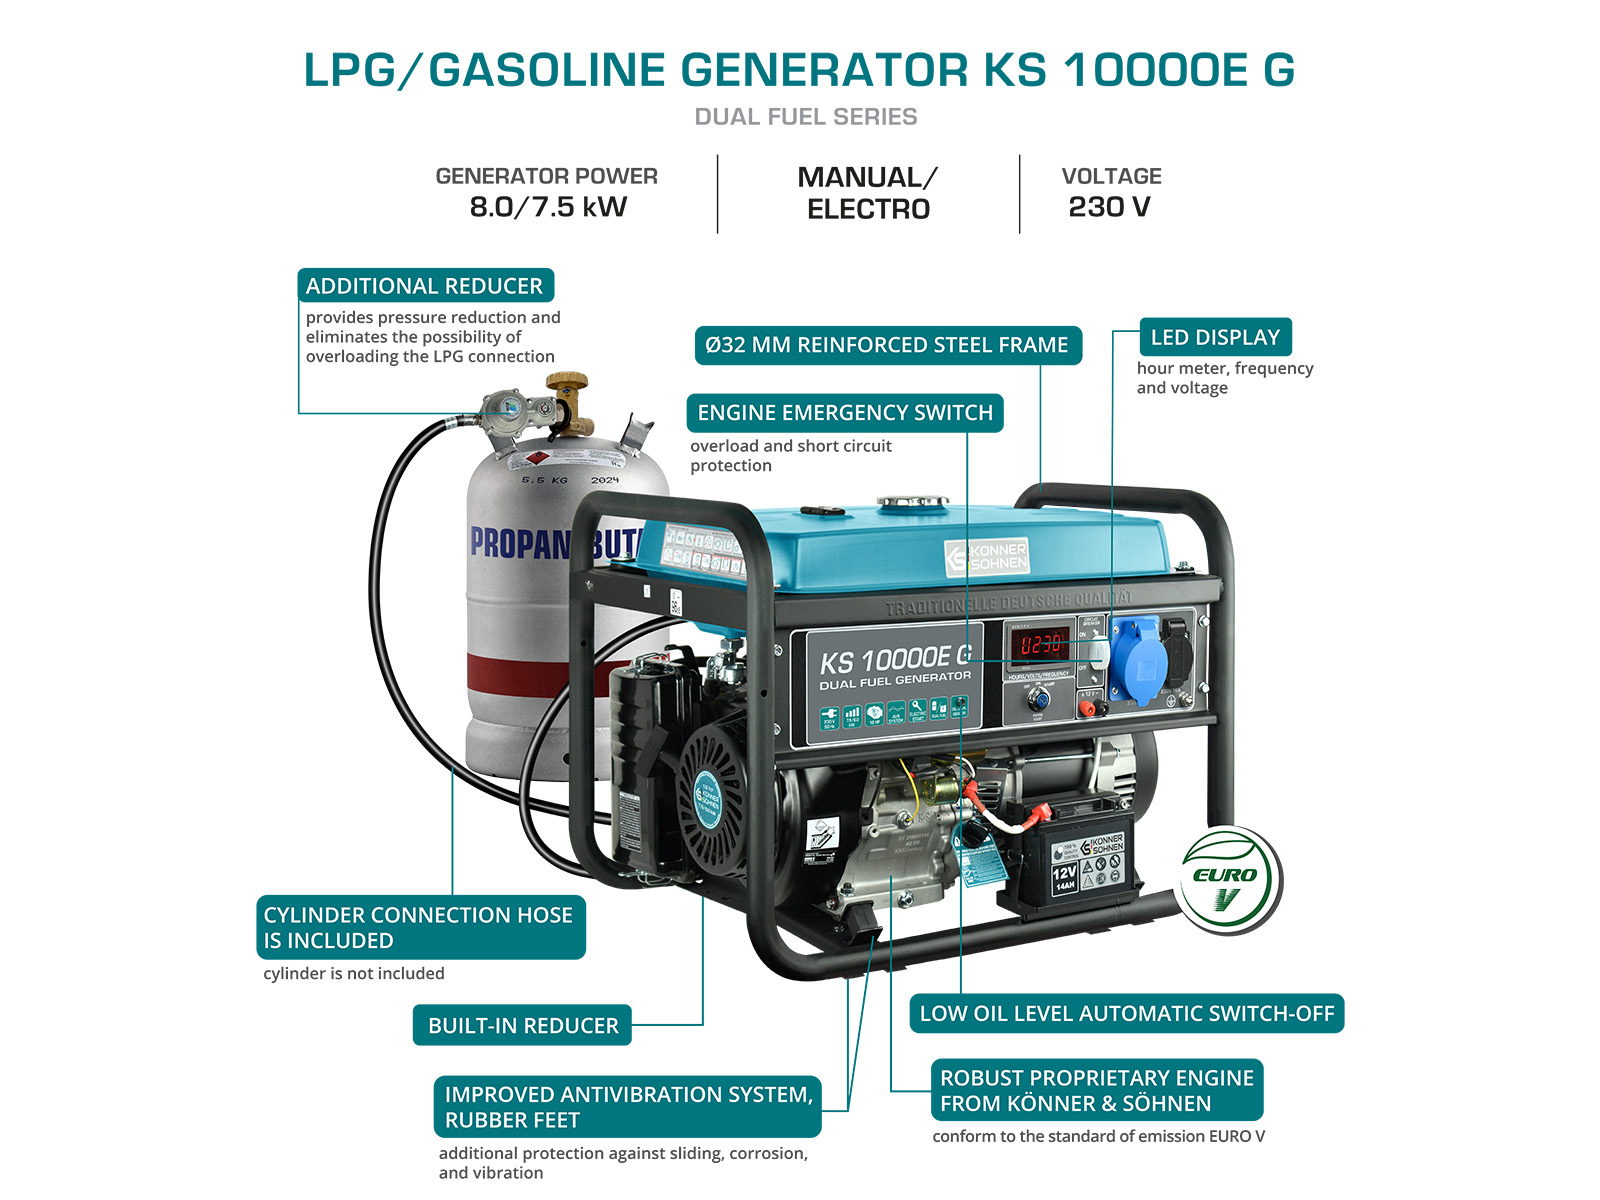 LPG / Gasoline generator "Könner & Söhnen" KS 10000E G